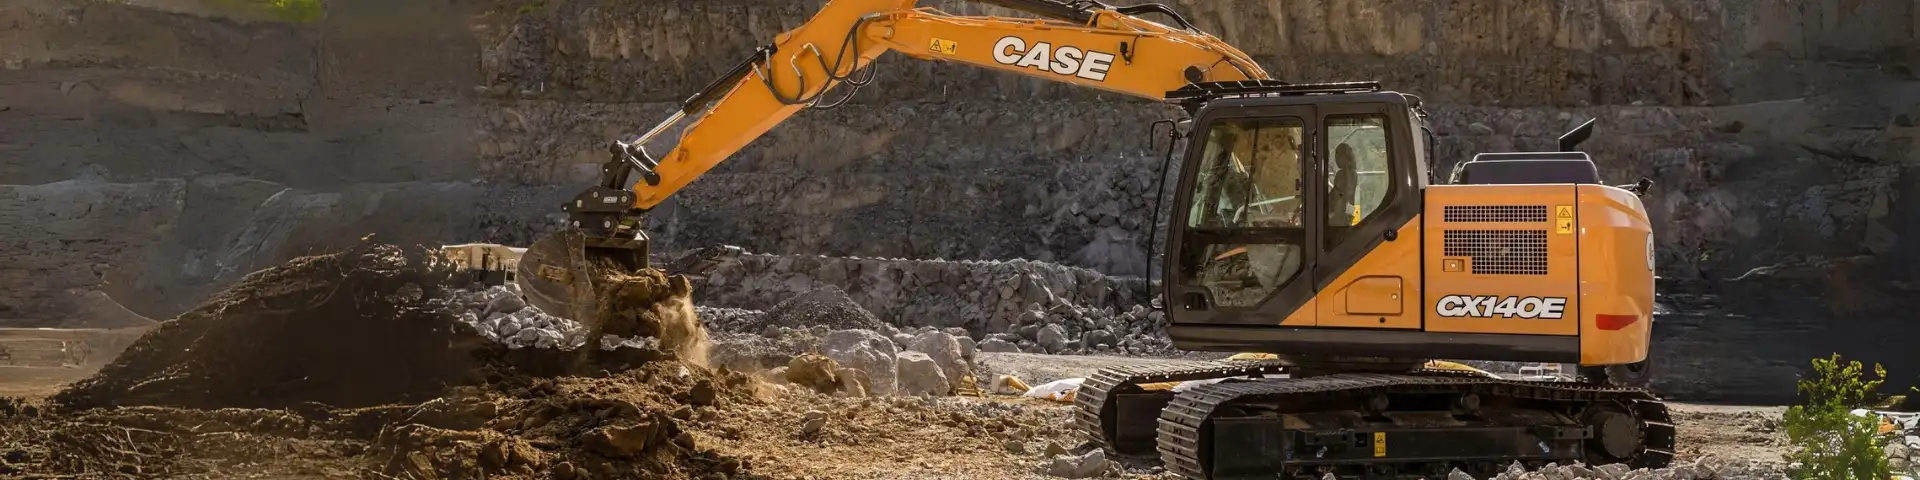 Leasing offer on CASE large excavators